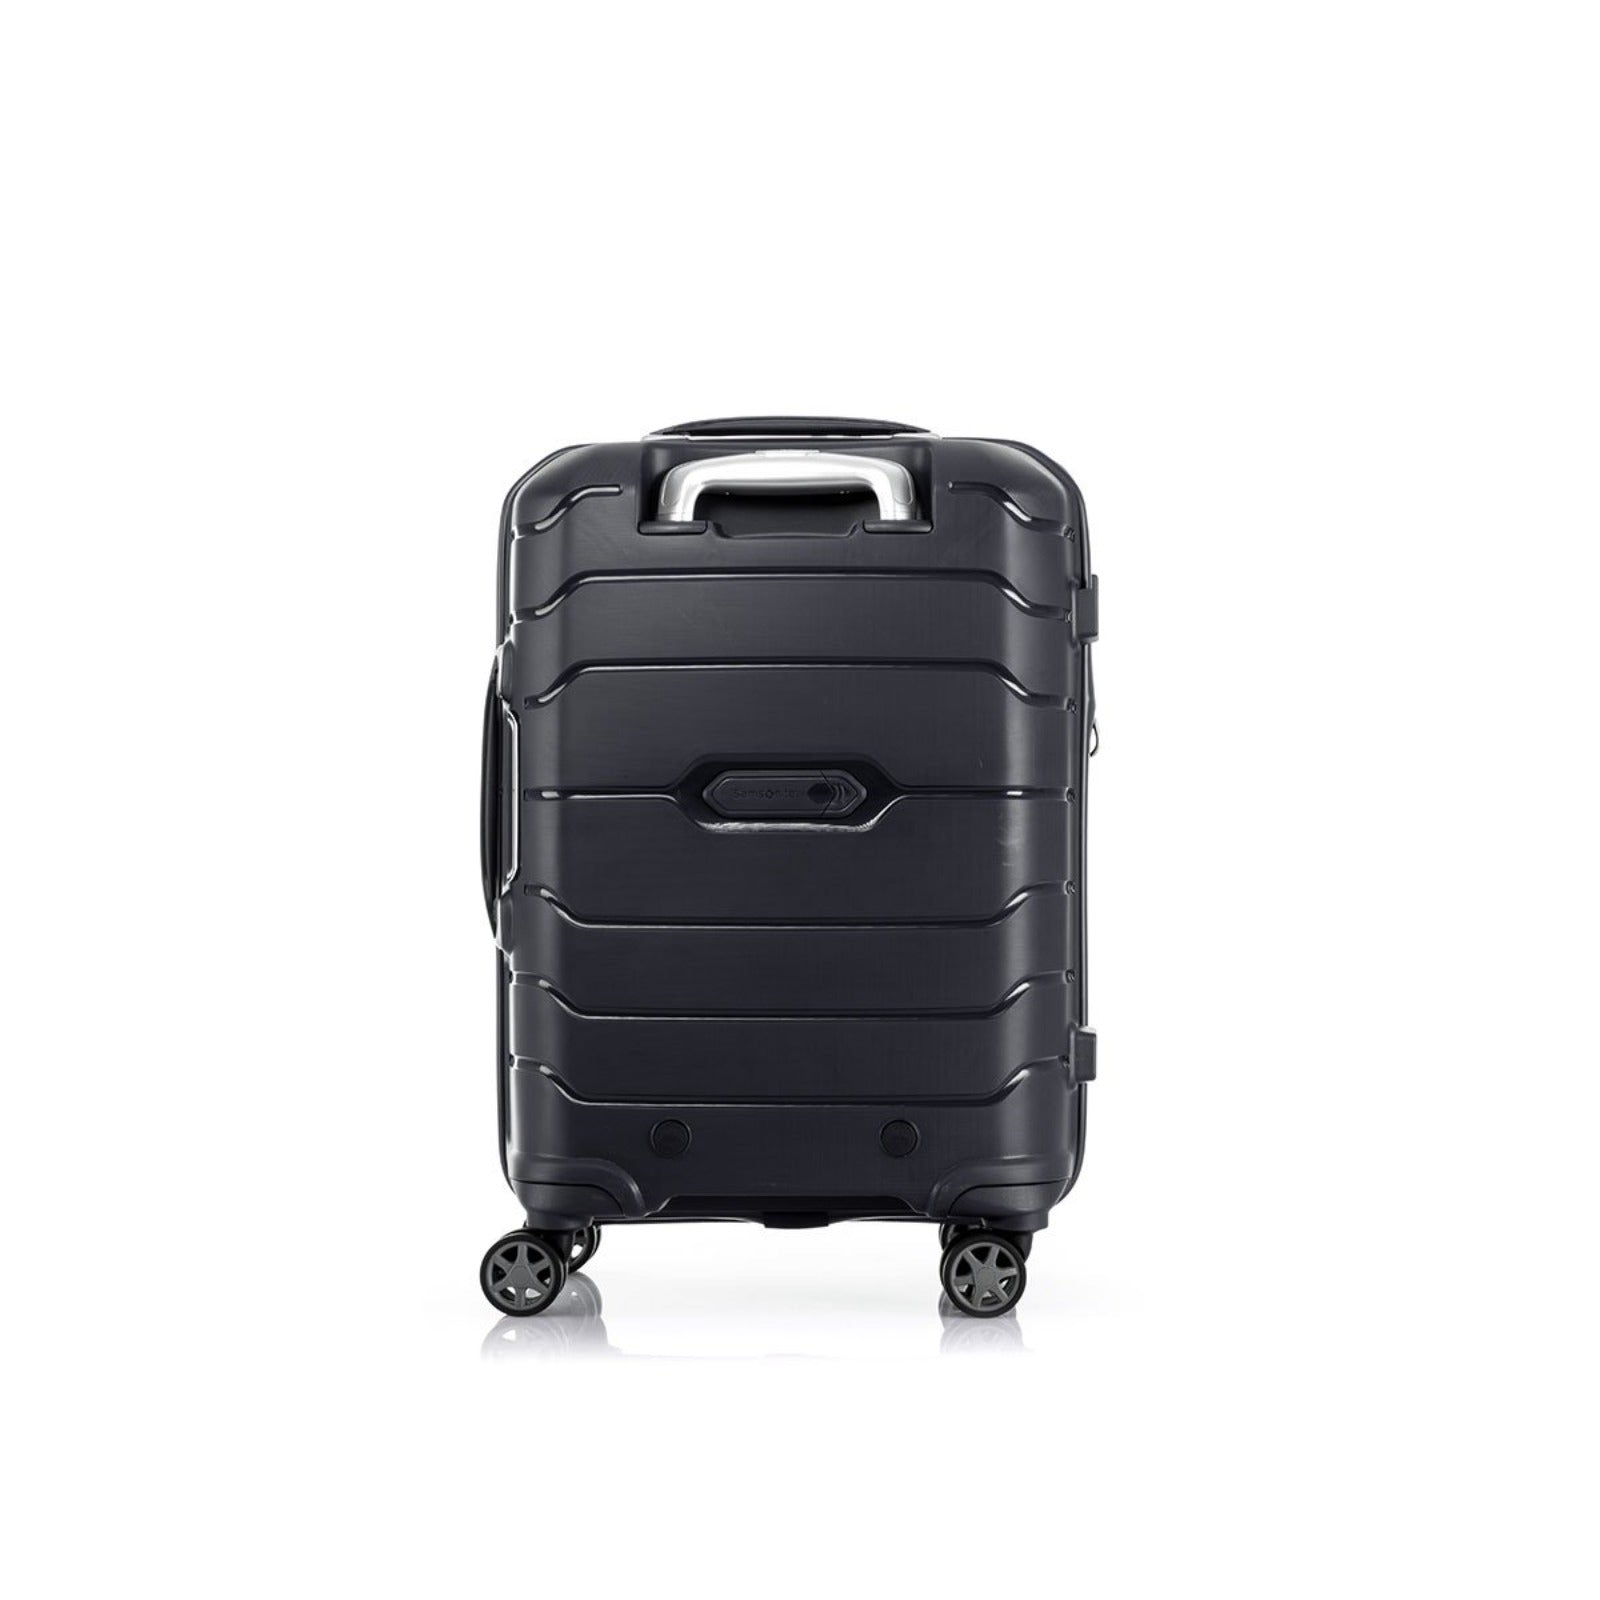 Samsonite_Oc2lite_55cm_Carry-On_Suitcase_Black_Back